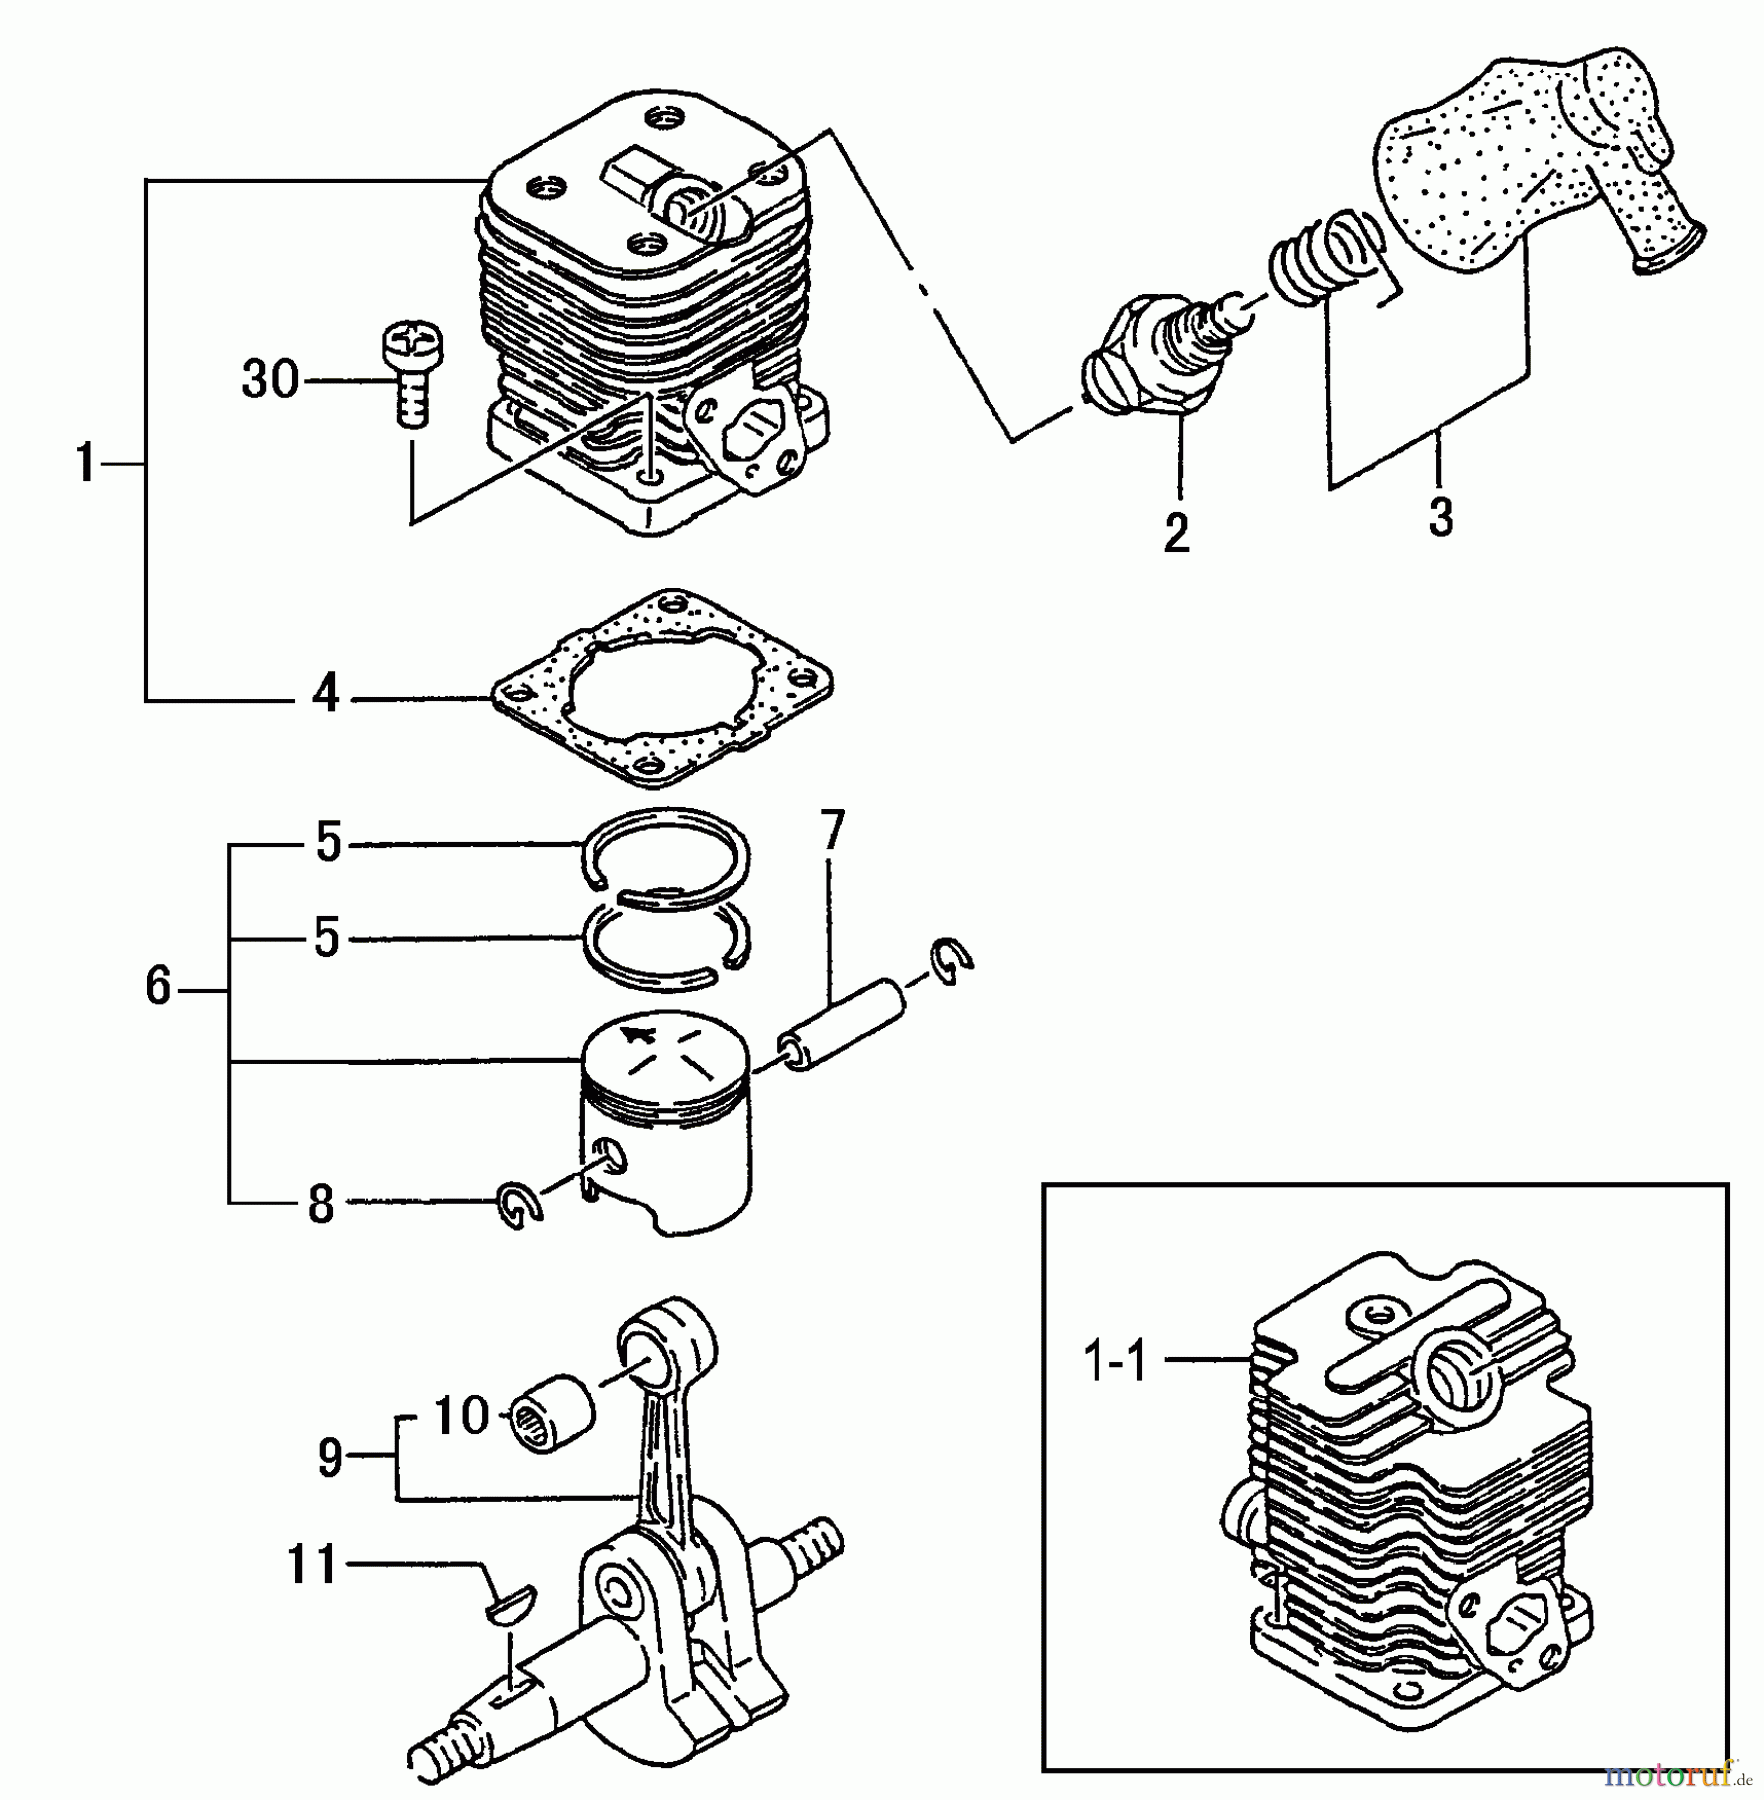  Tanaka Erdbohrer TED-262 - Tanaka Portable Gas Drill Cylinder, Piston, Crankshaft